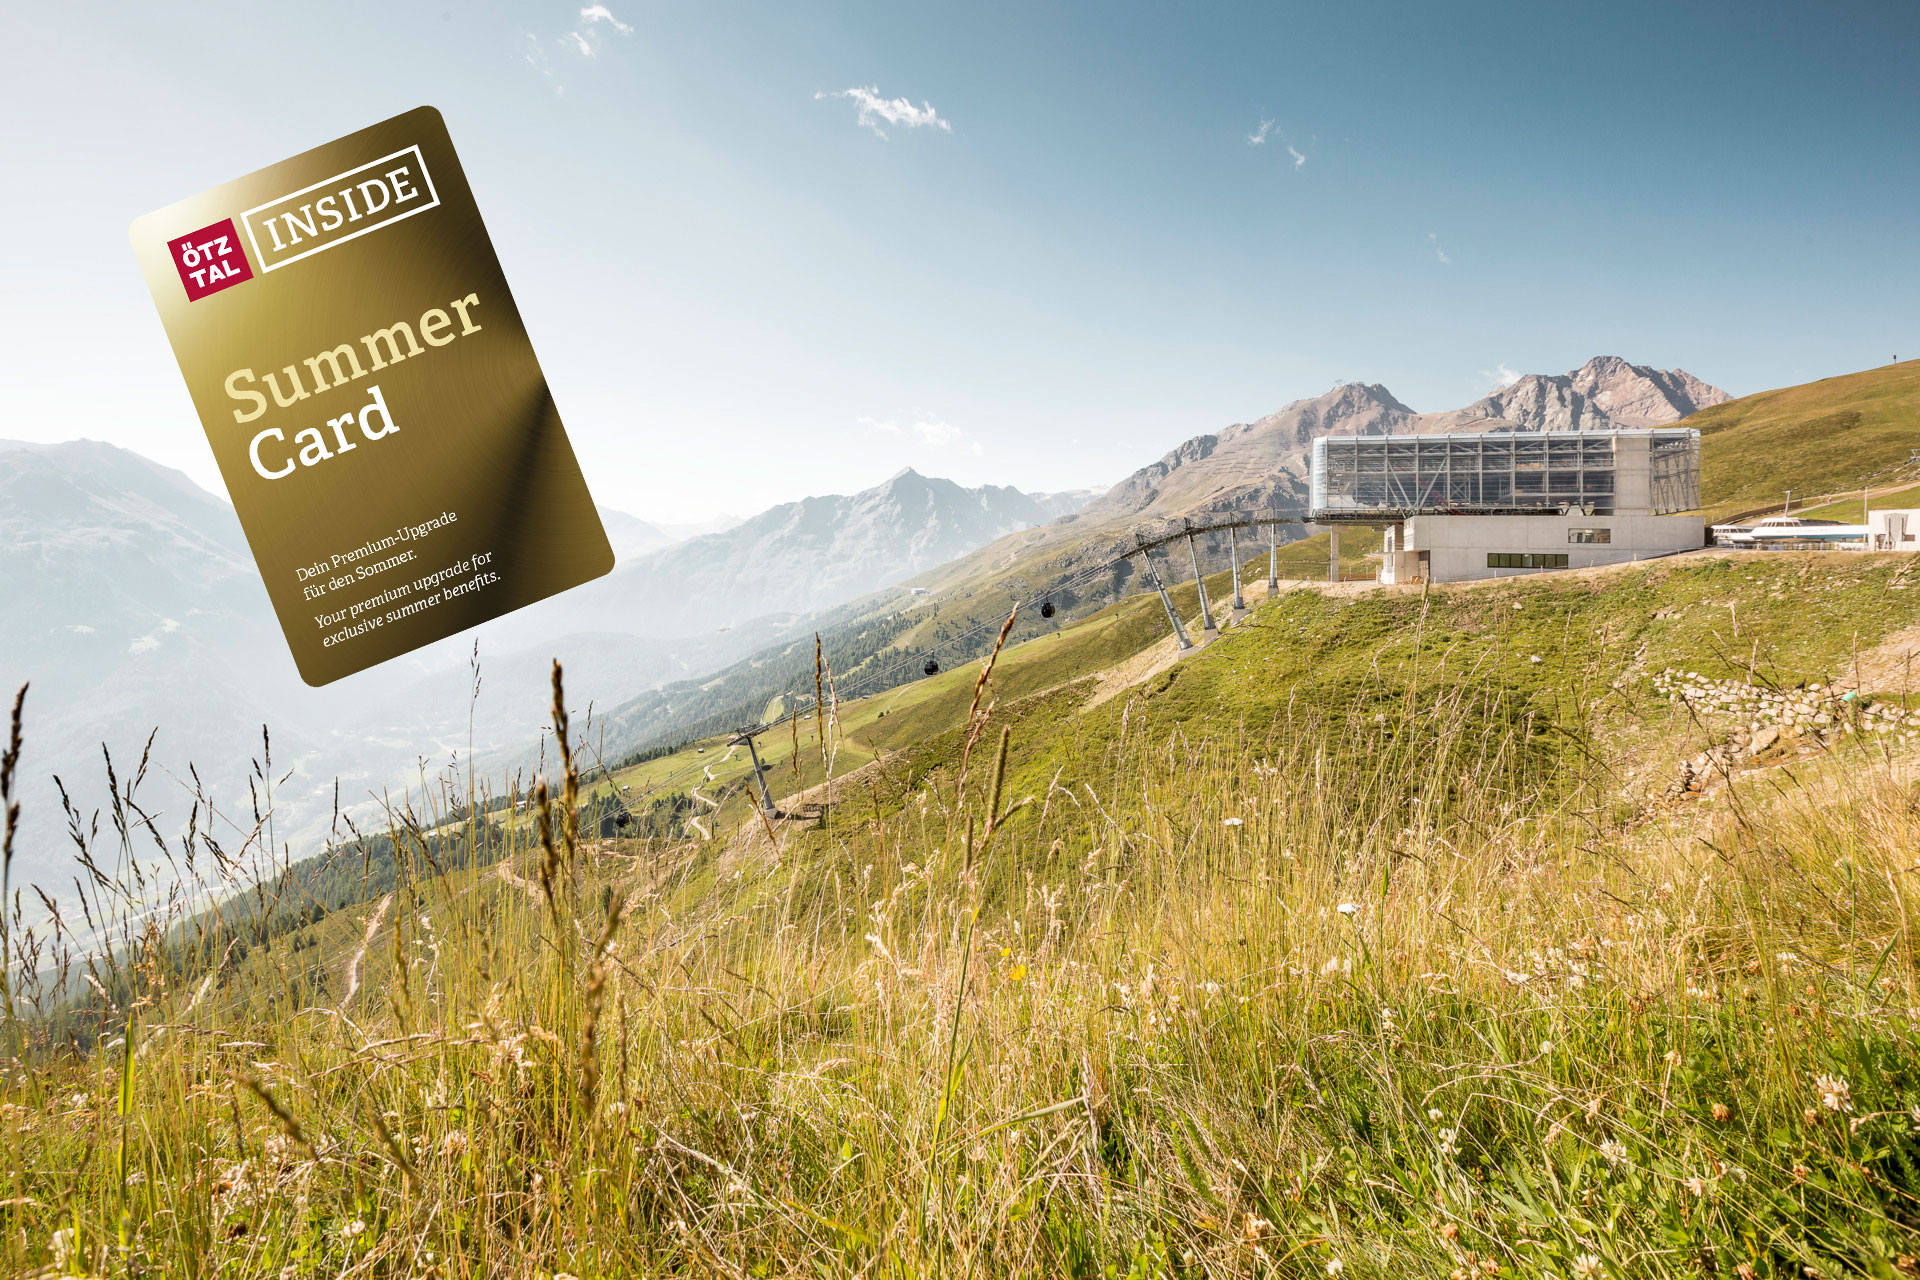 Ötztal Inside Summer Card – Freie Nutzung der Bergbahnen